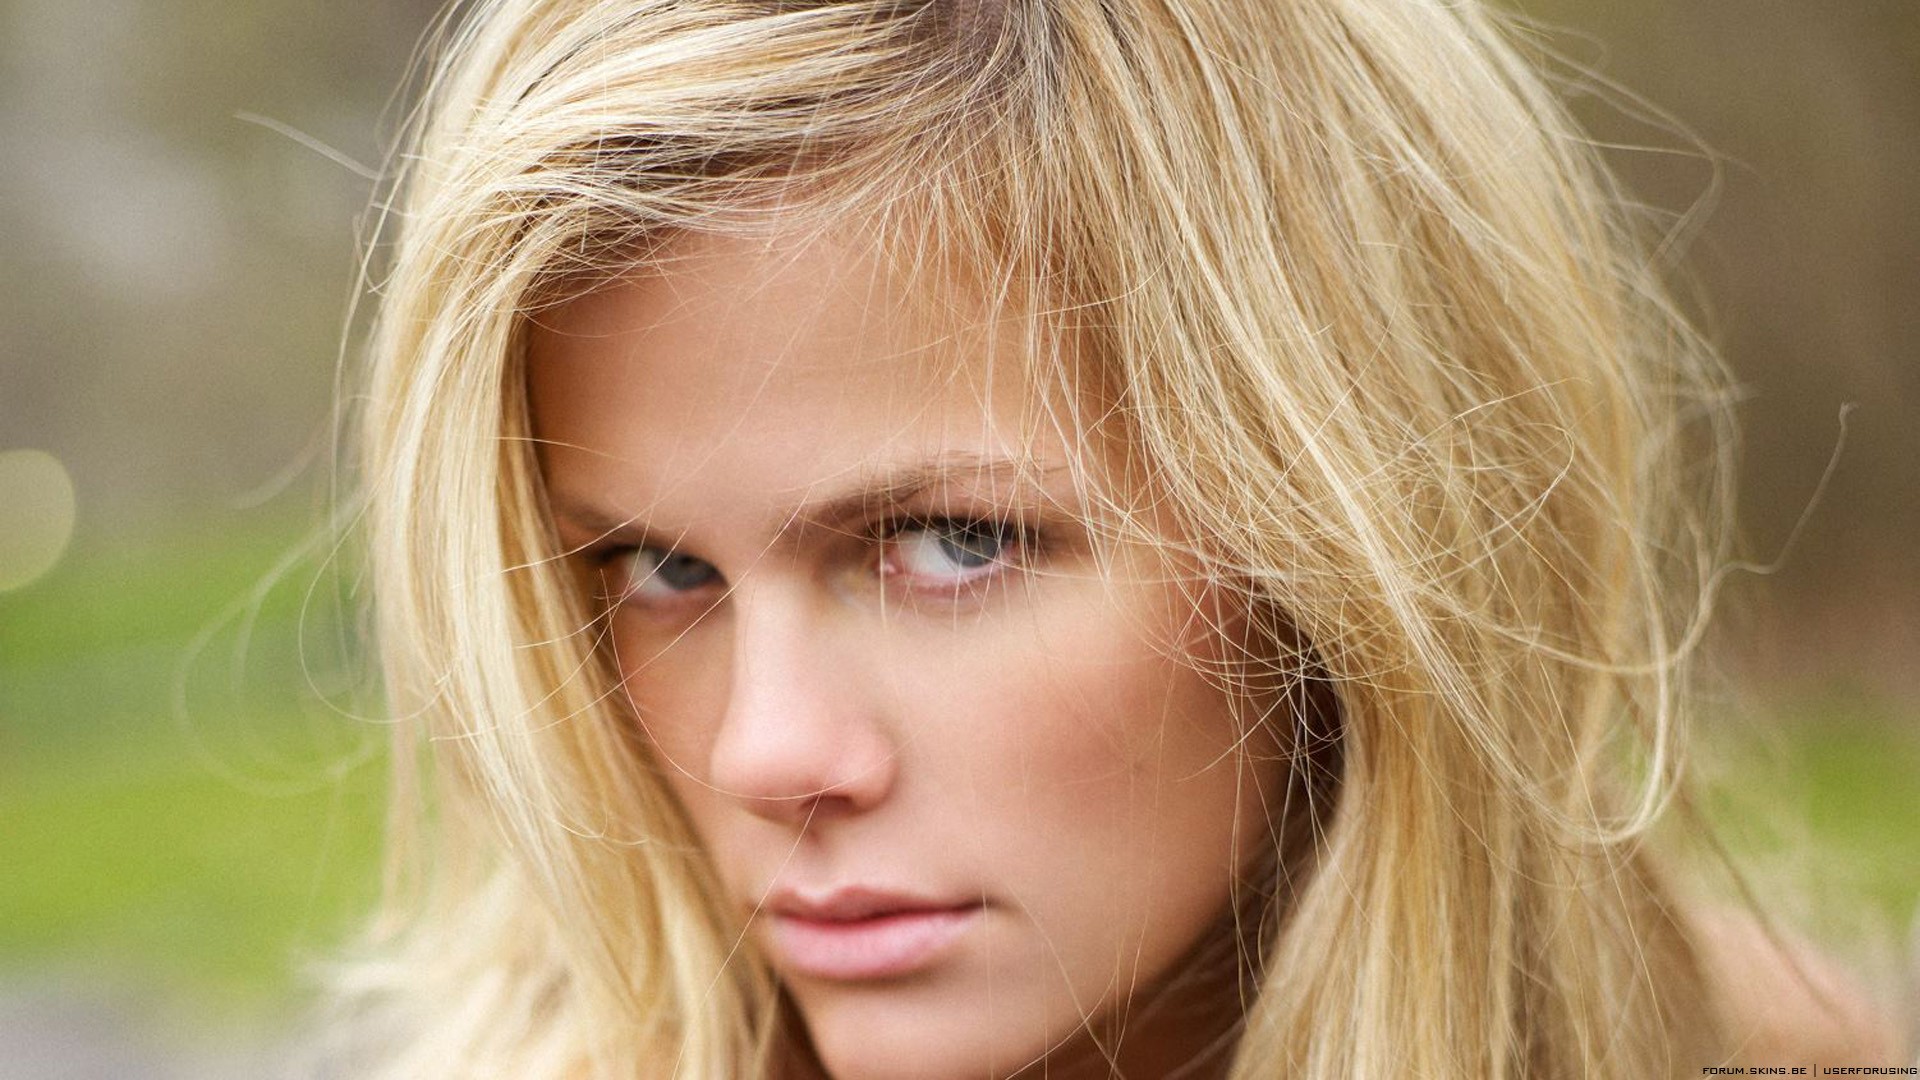 blondes, women, models, Brooklyn Decker, faces - desktop wallpaper